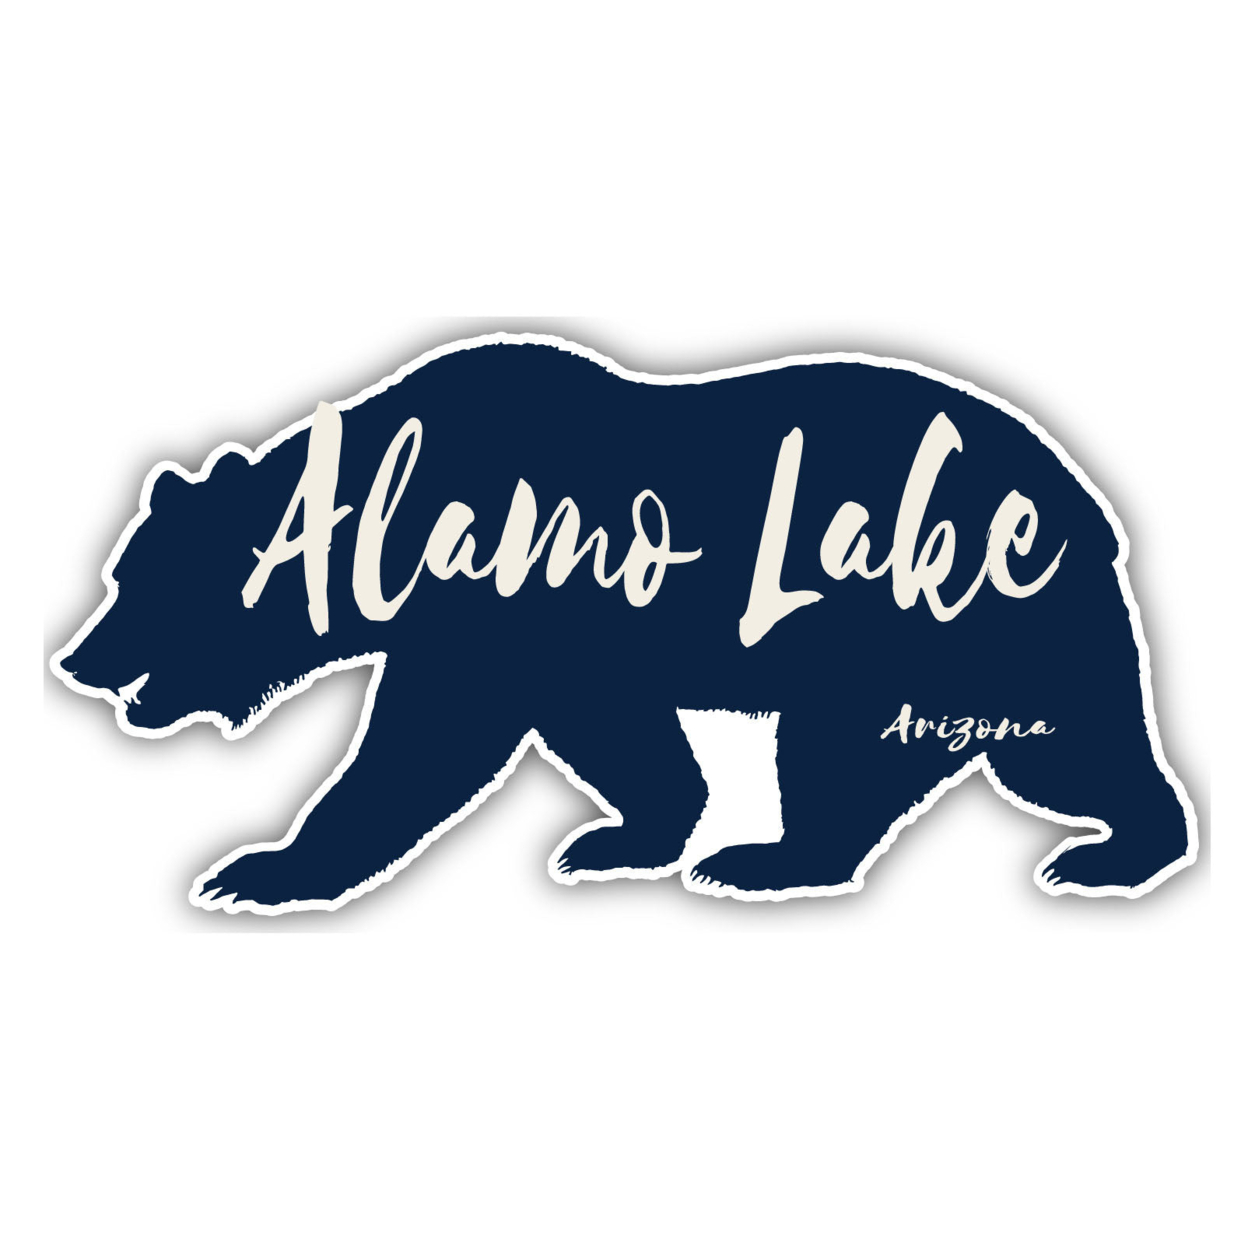 Alamo Lake Arizona Souvenir Decorative Stickers (Choose Theme And Size) - 4-Pack, 6-Inch, Bear